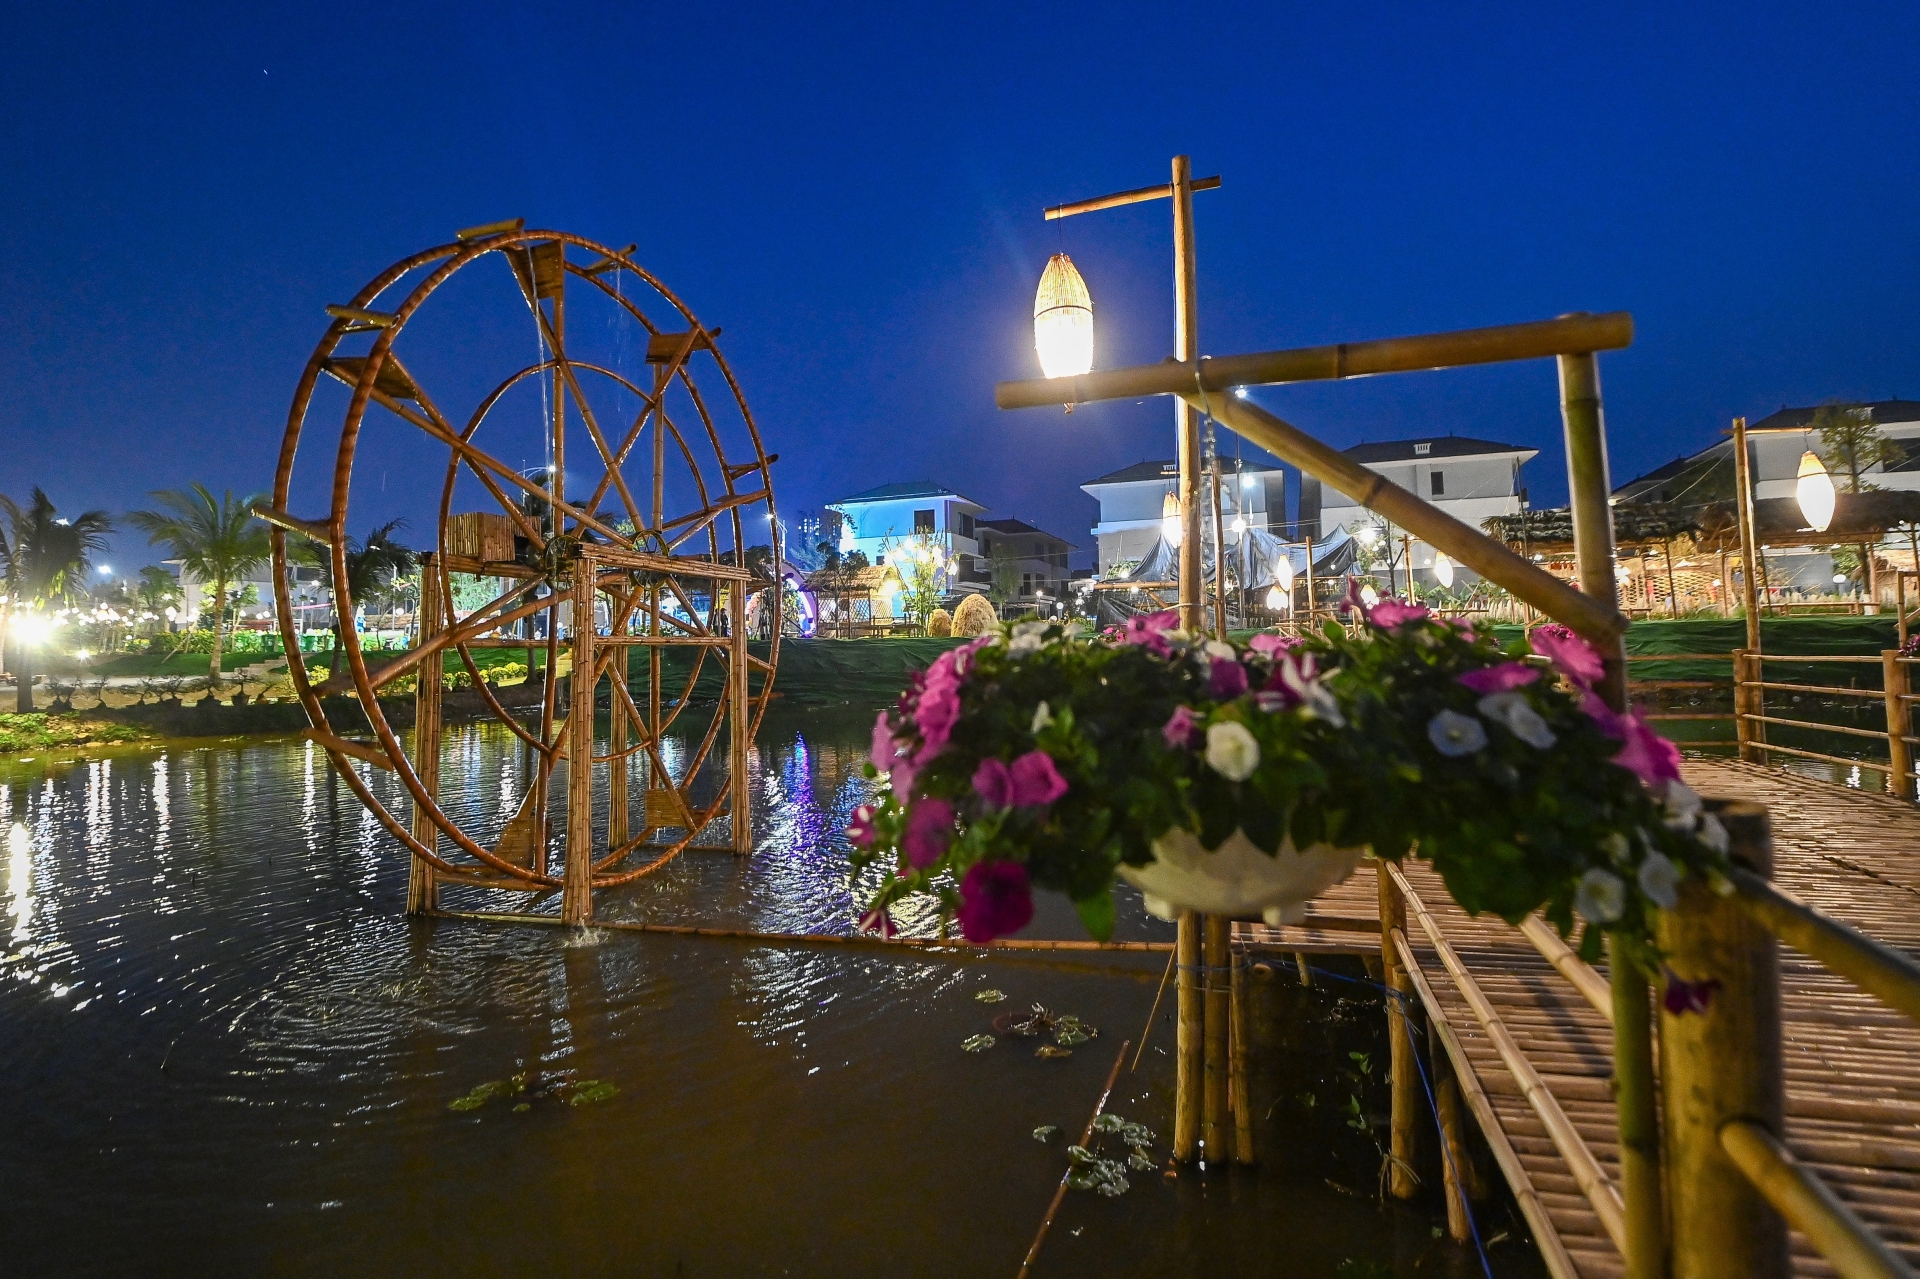 flower street opens at splendora urban area to celebrate lunar new year holiday